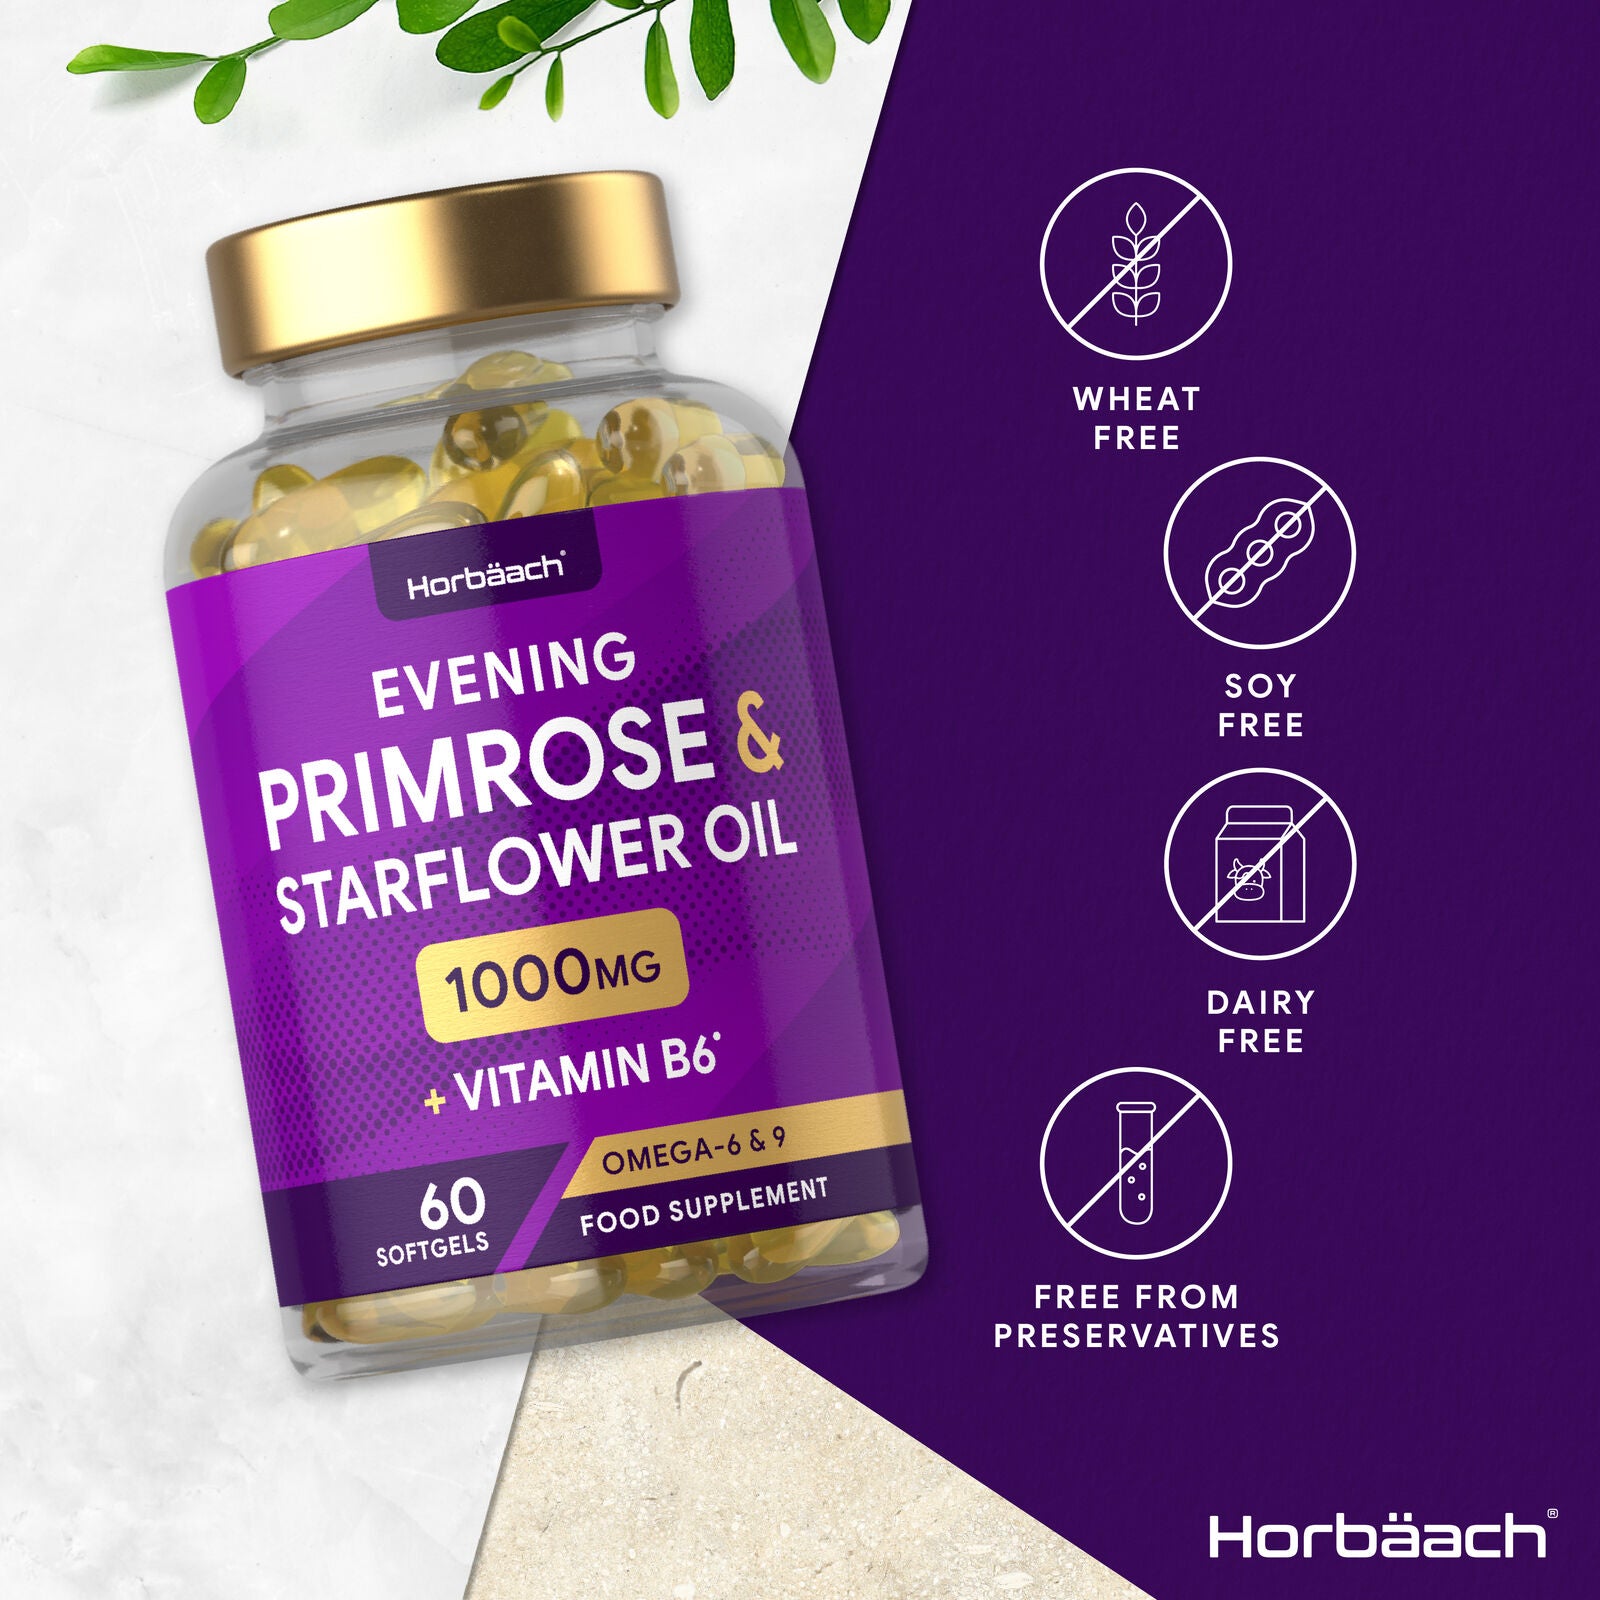 Evening Primrose and Starflower Oil 1000 mg | 60 Softgels